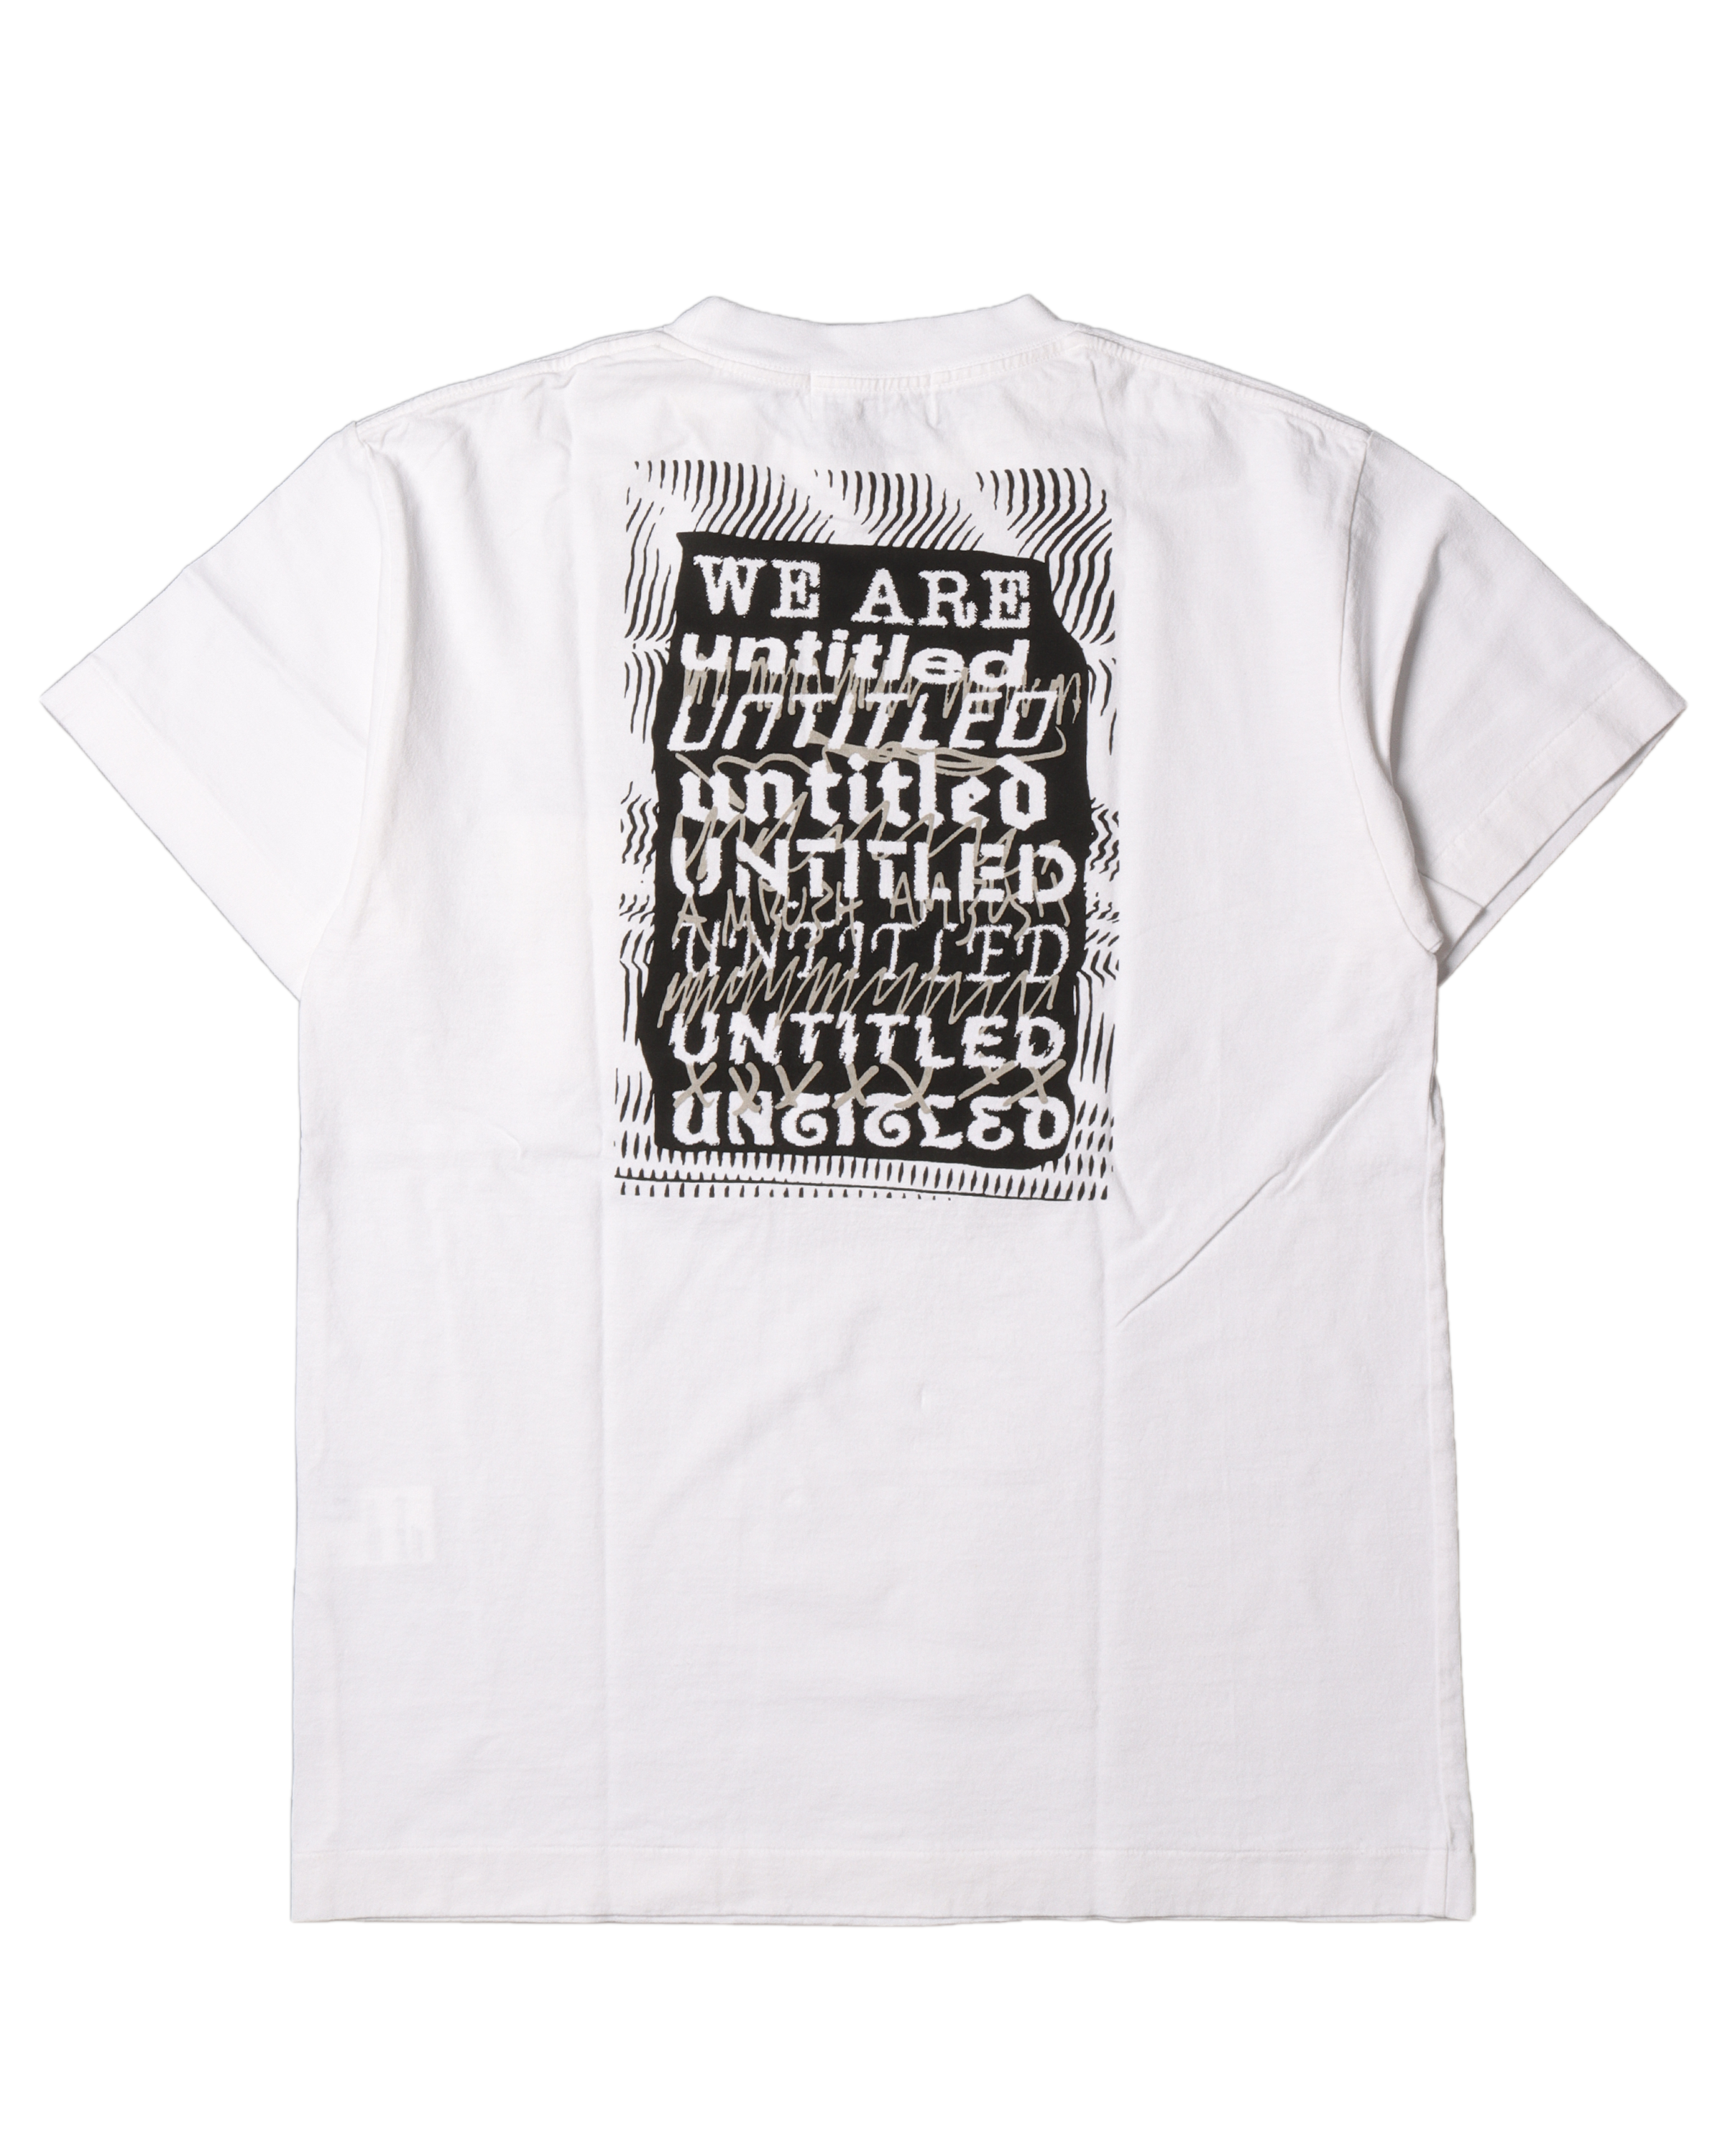 "Uncensored" T-shirt